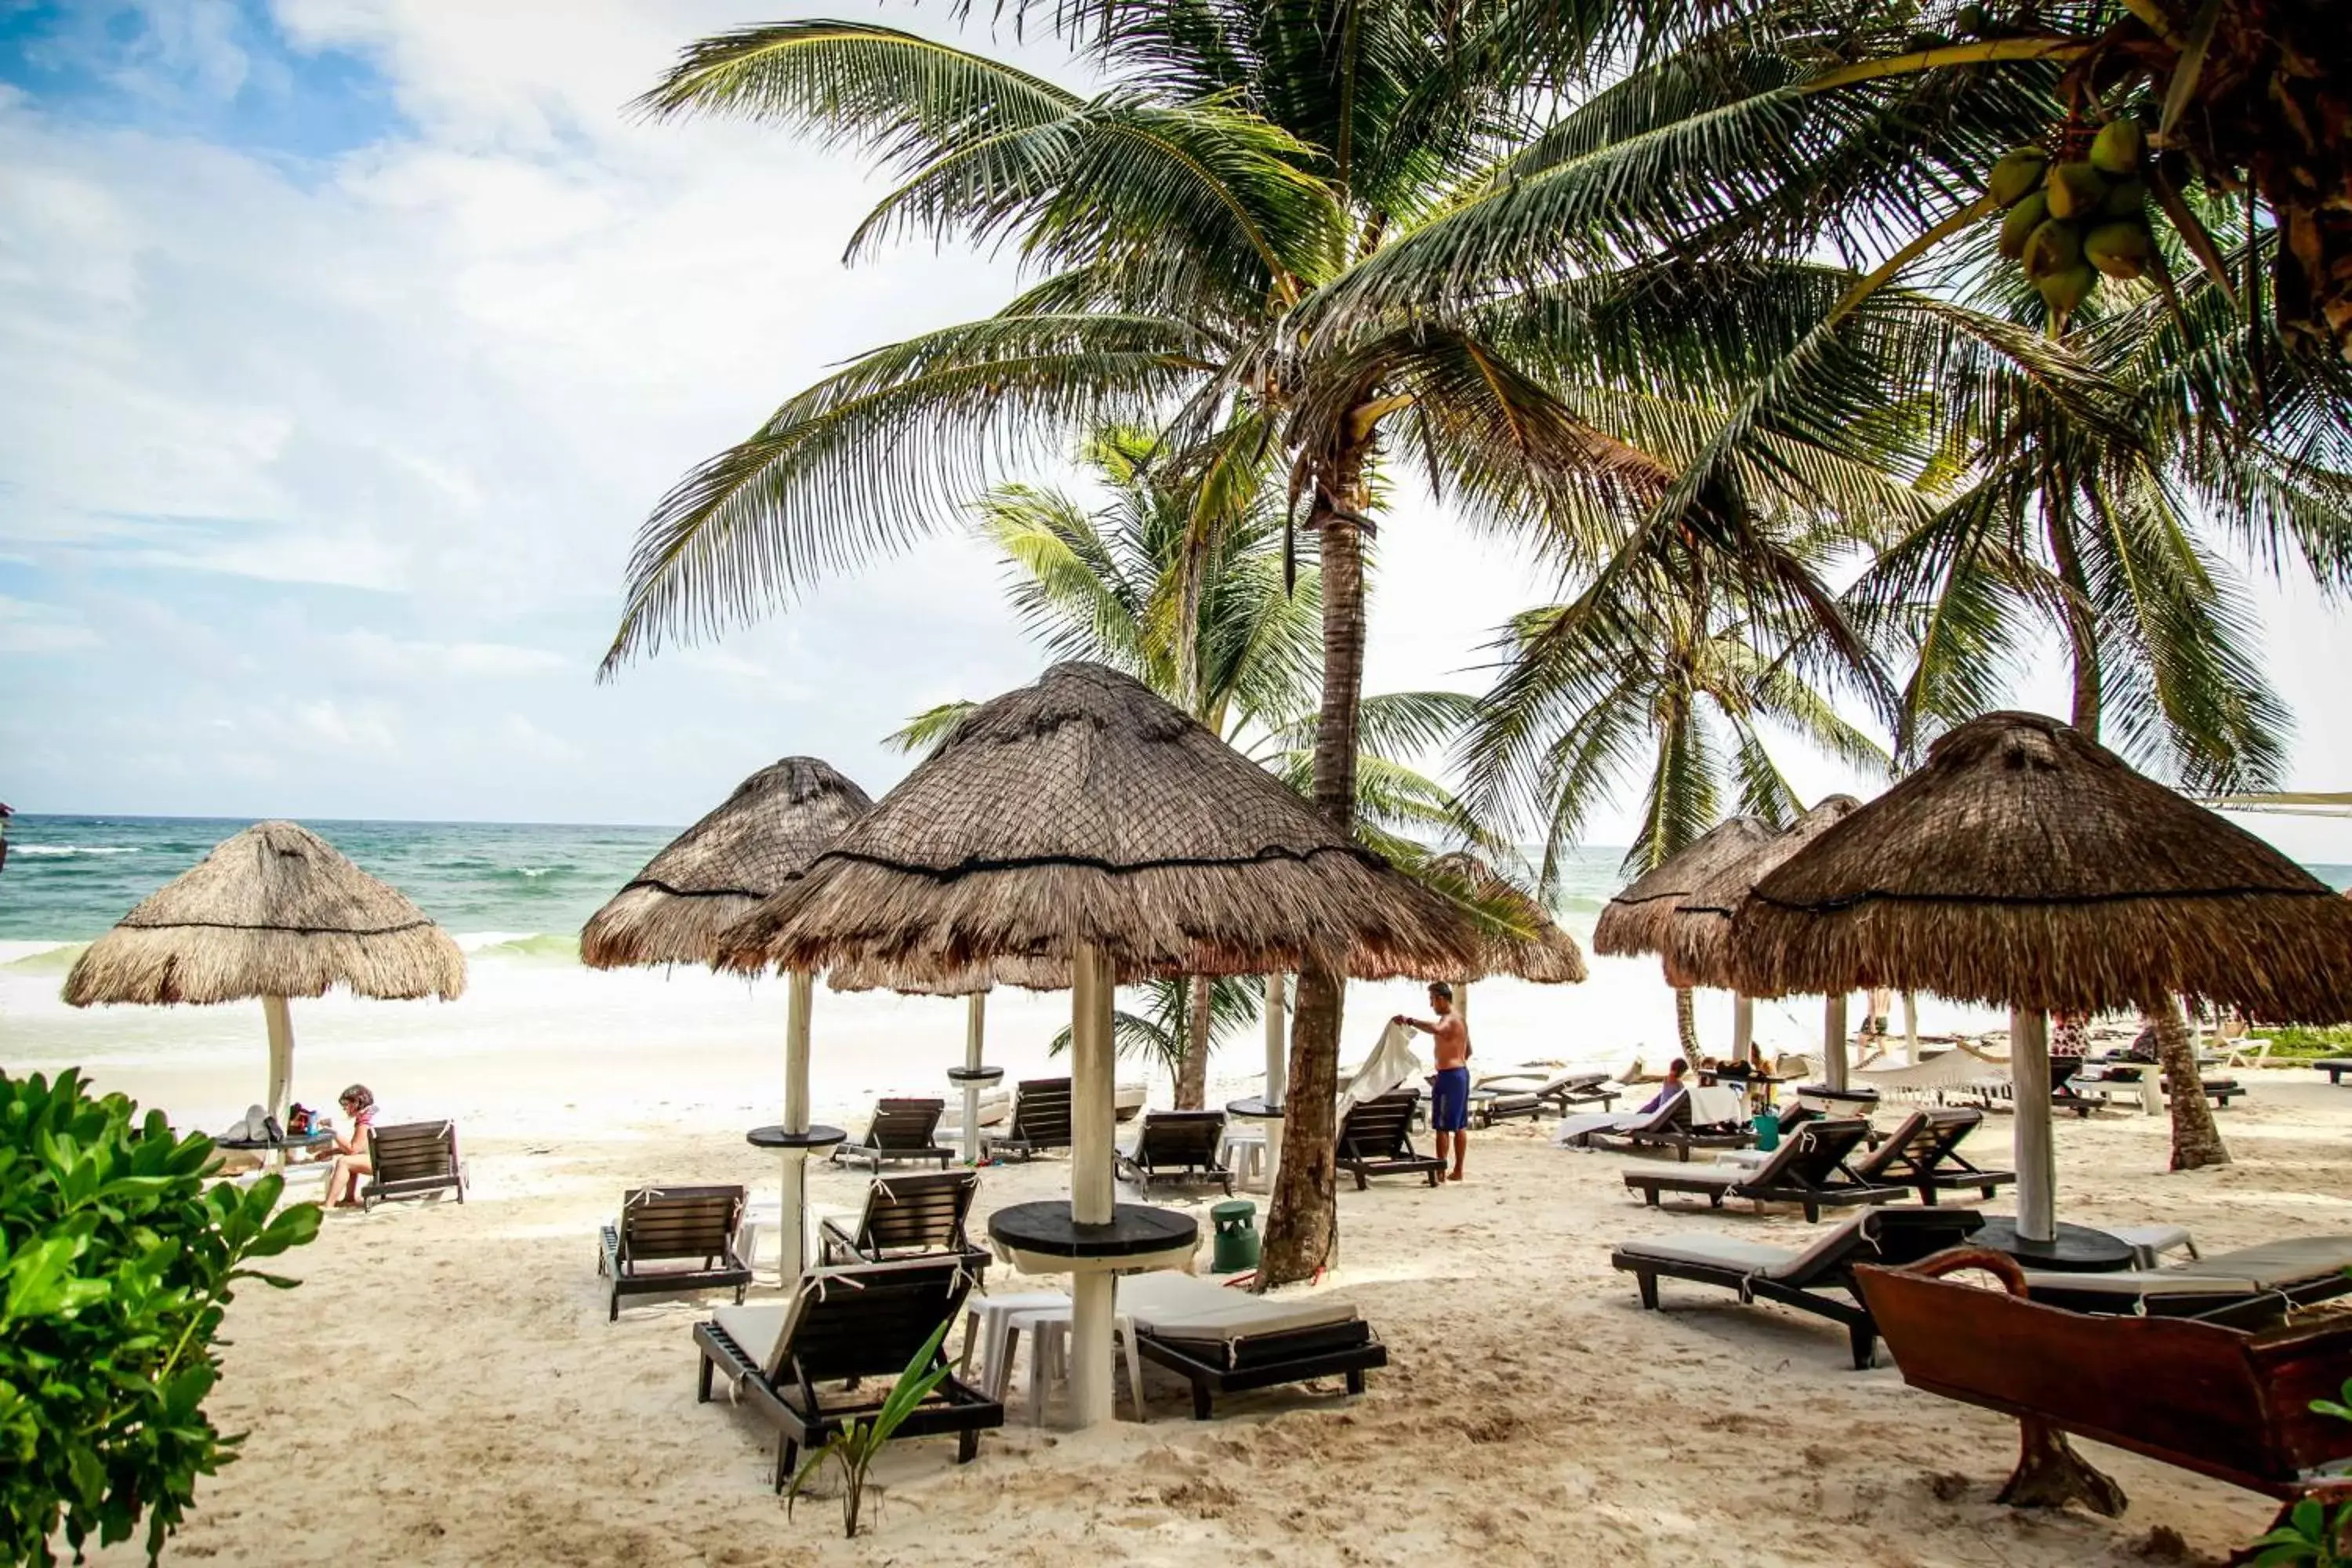 Beach in Villa Las Estrellas Tulum - located at the party zone